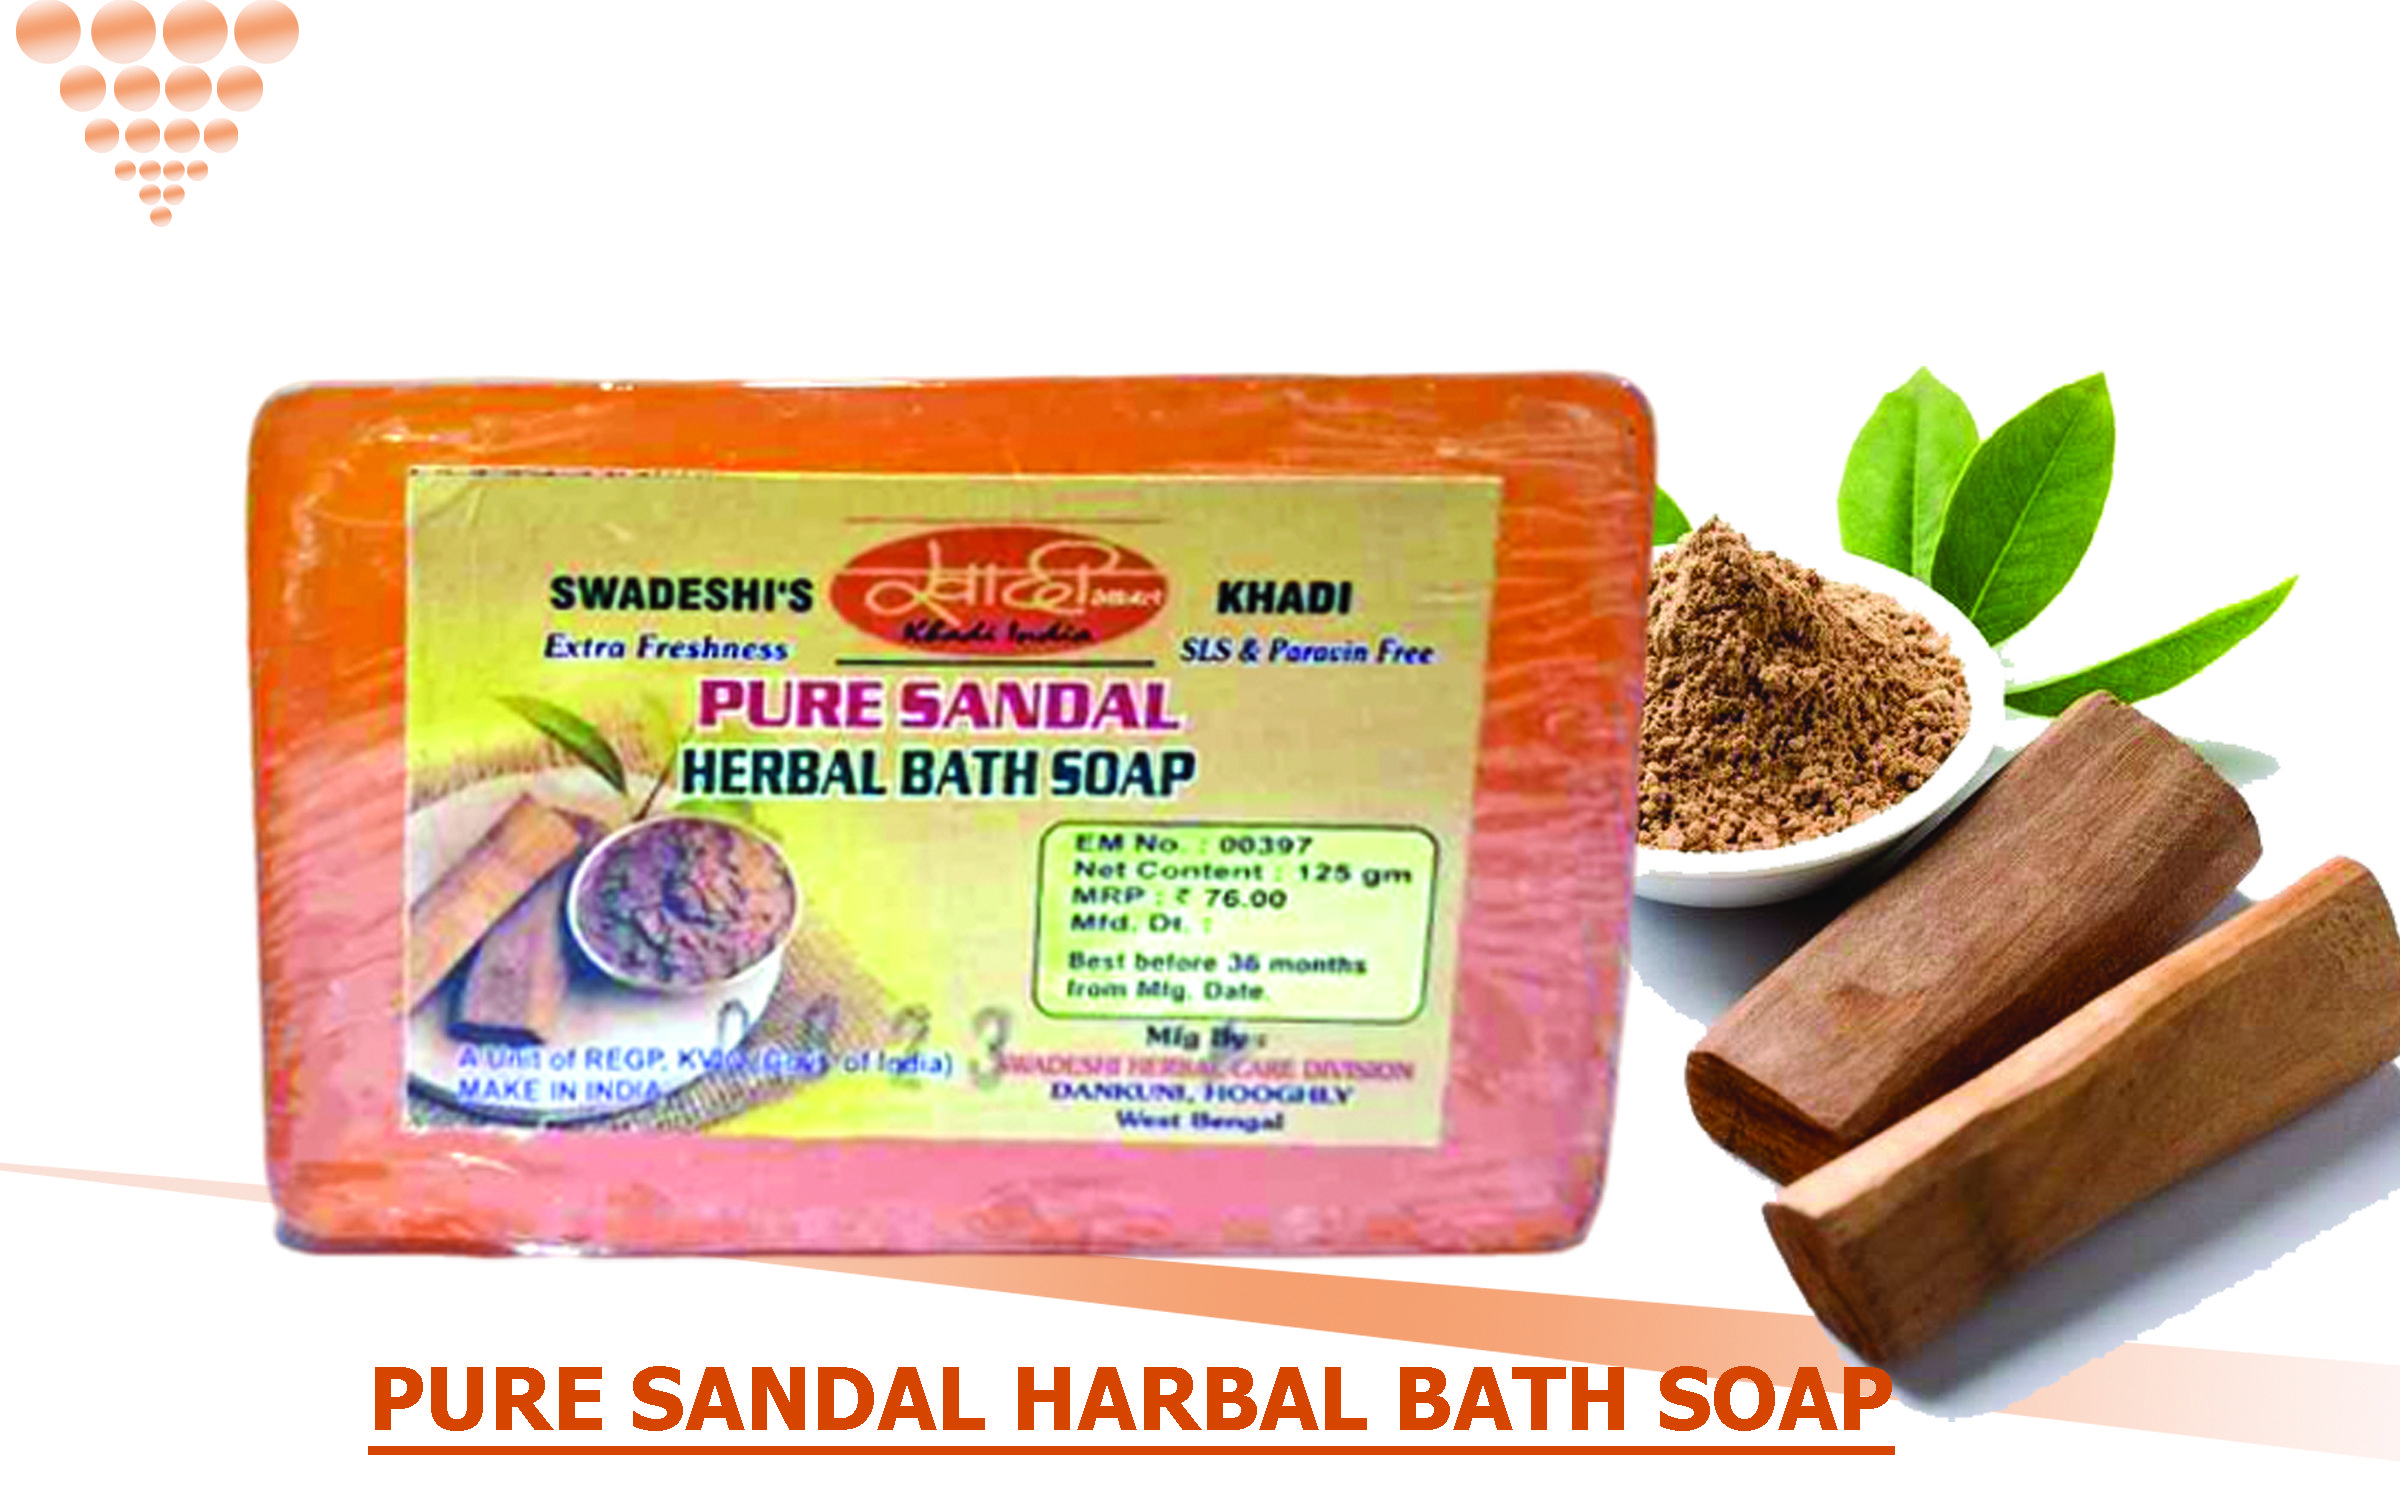 SANDAL HARBAL SOAP